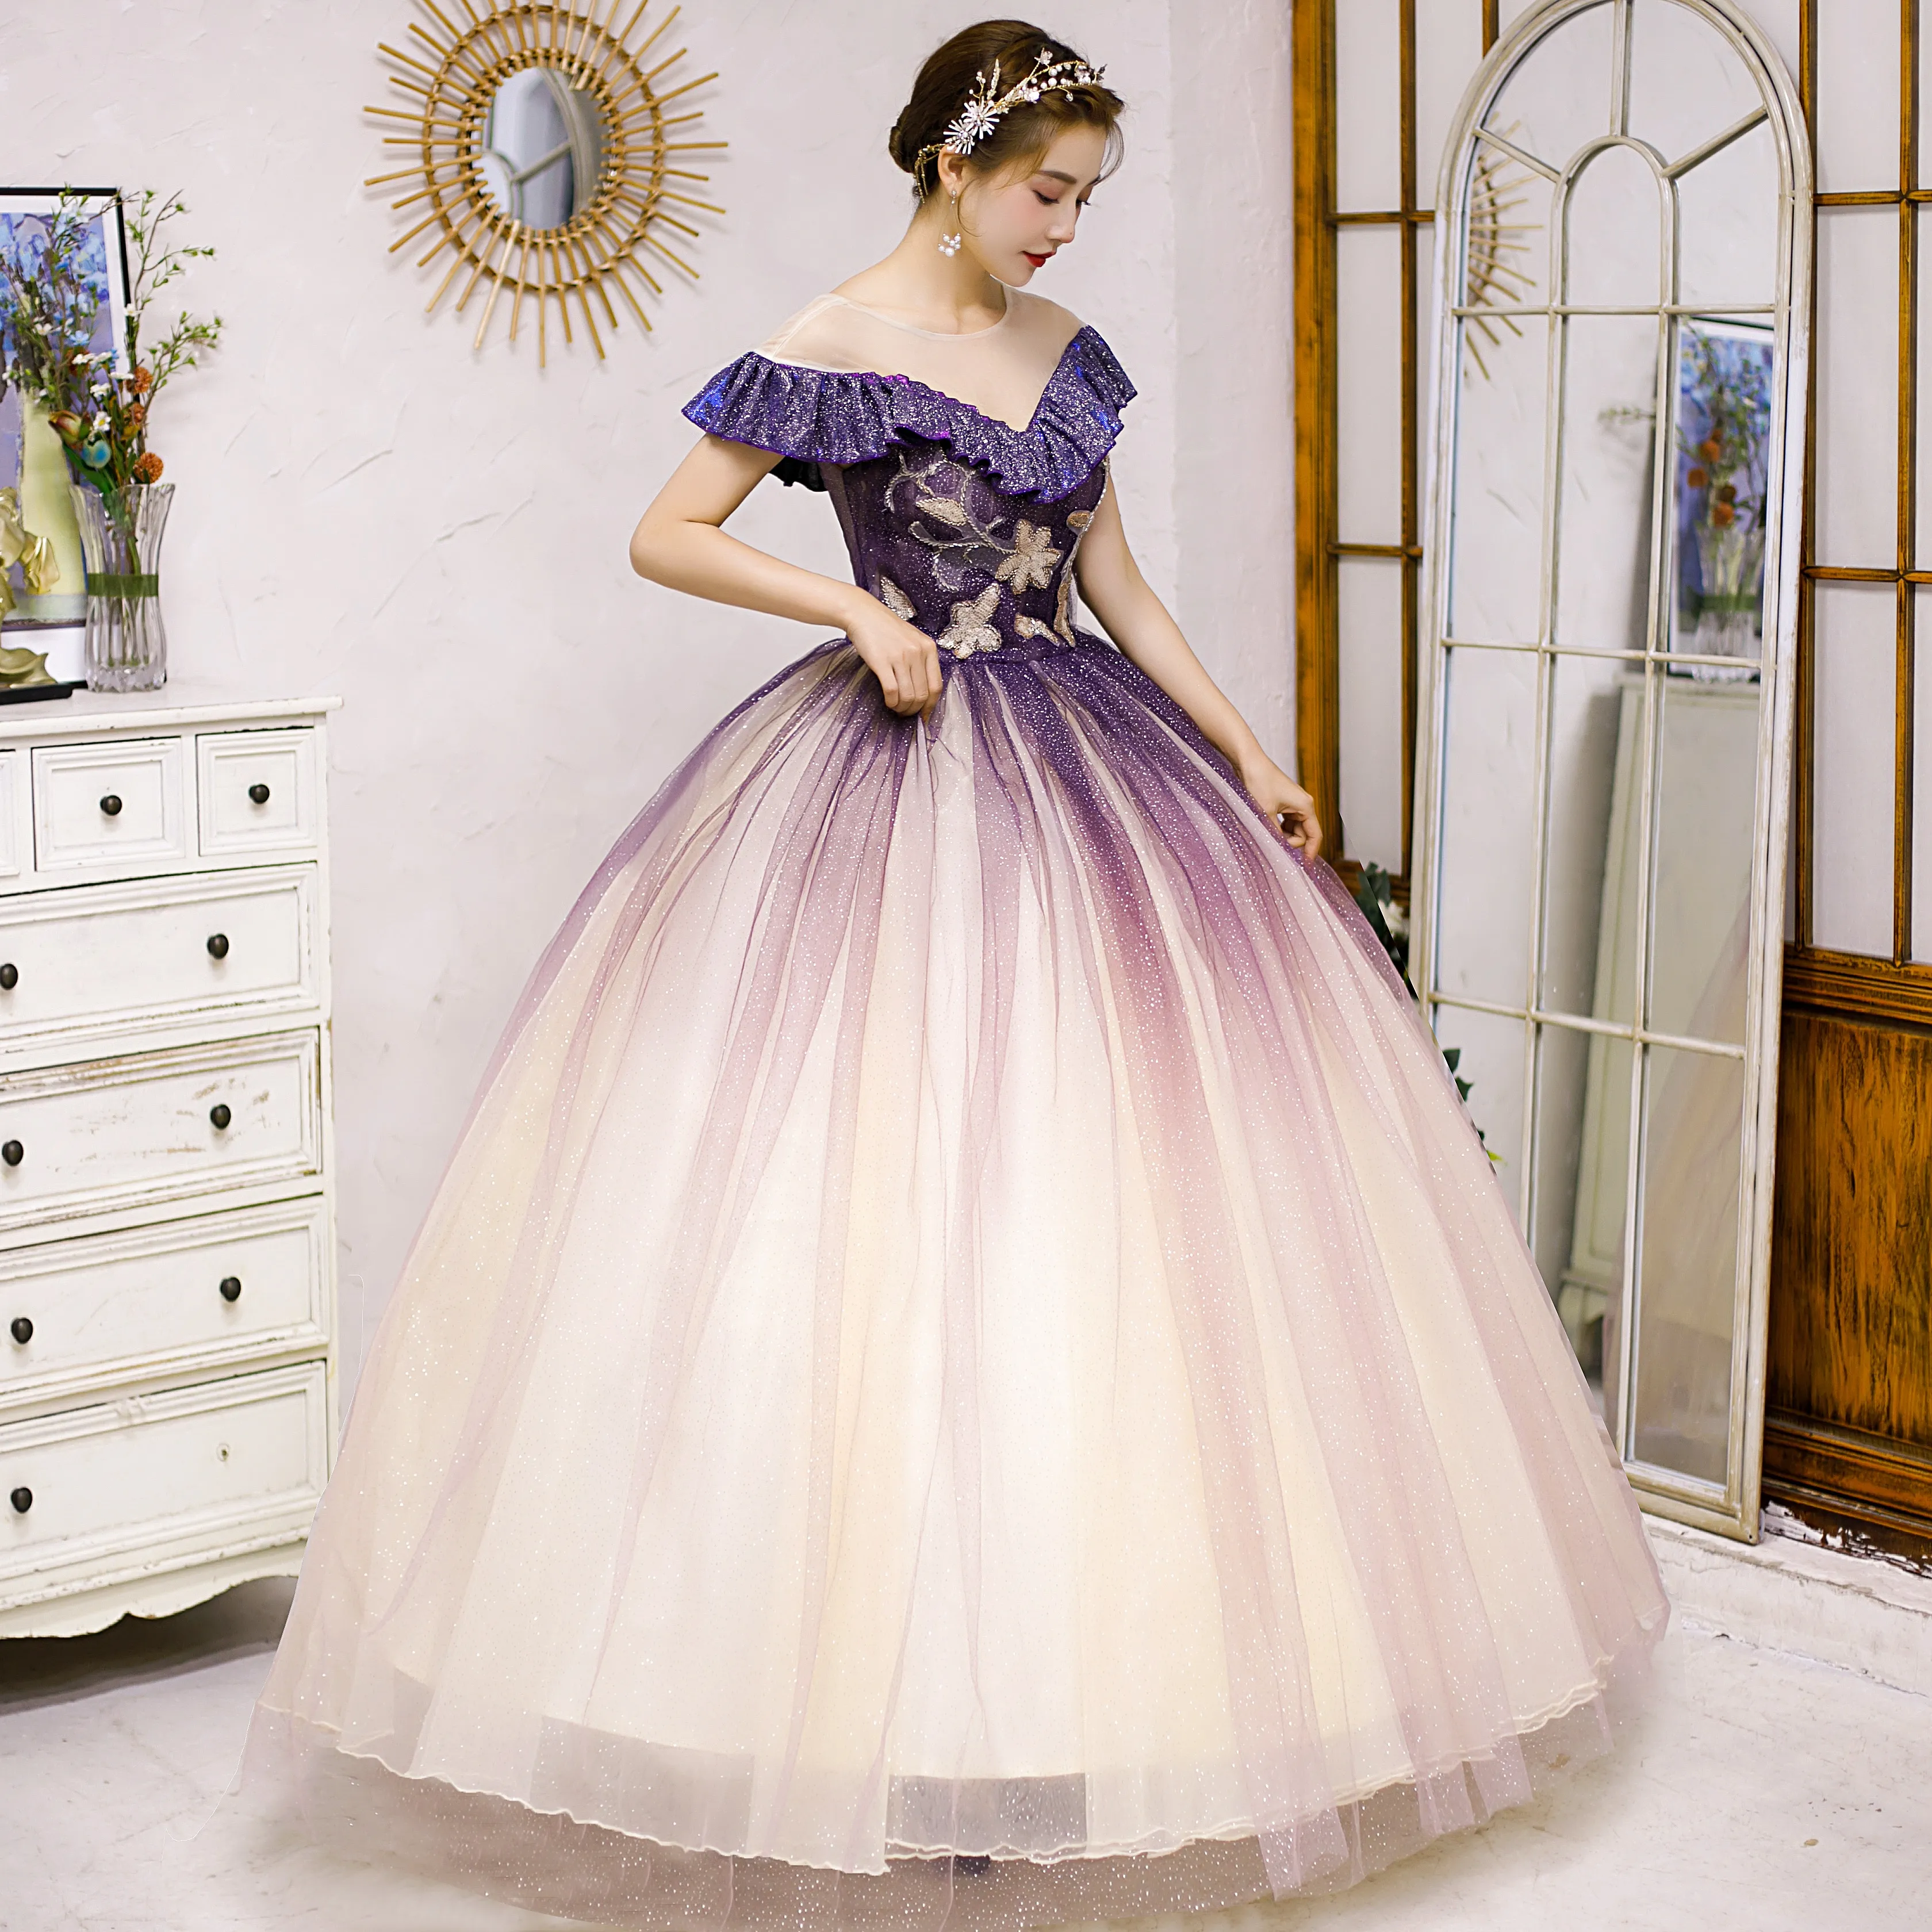 Princess Ball Gown Wedding Dresses,Ruffled Bridal Gown,WD00354 -  Wishingdress